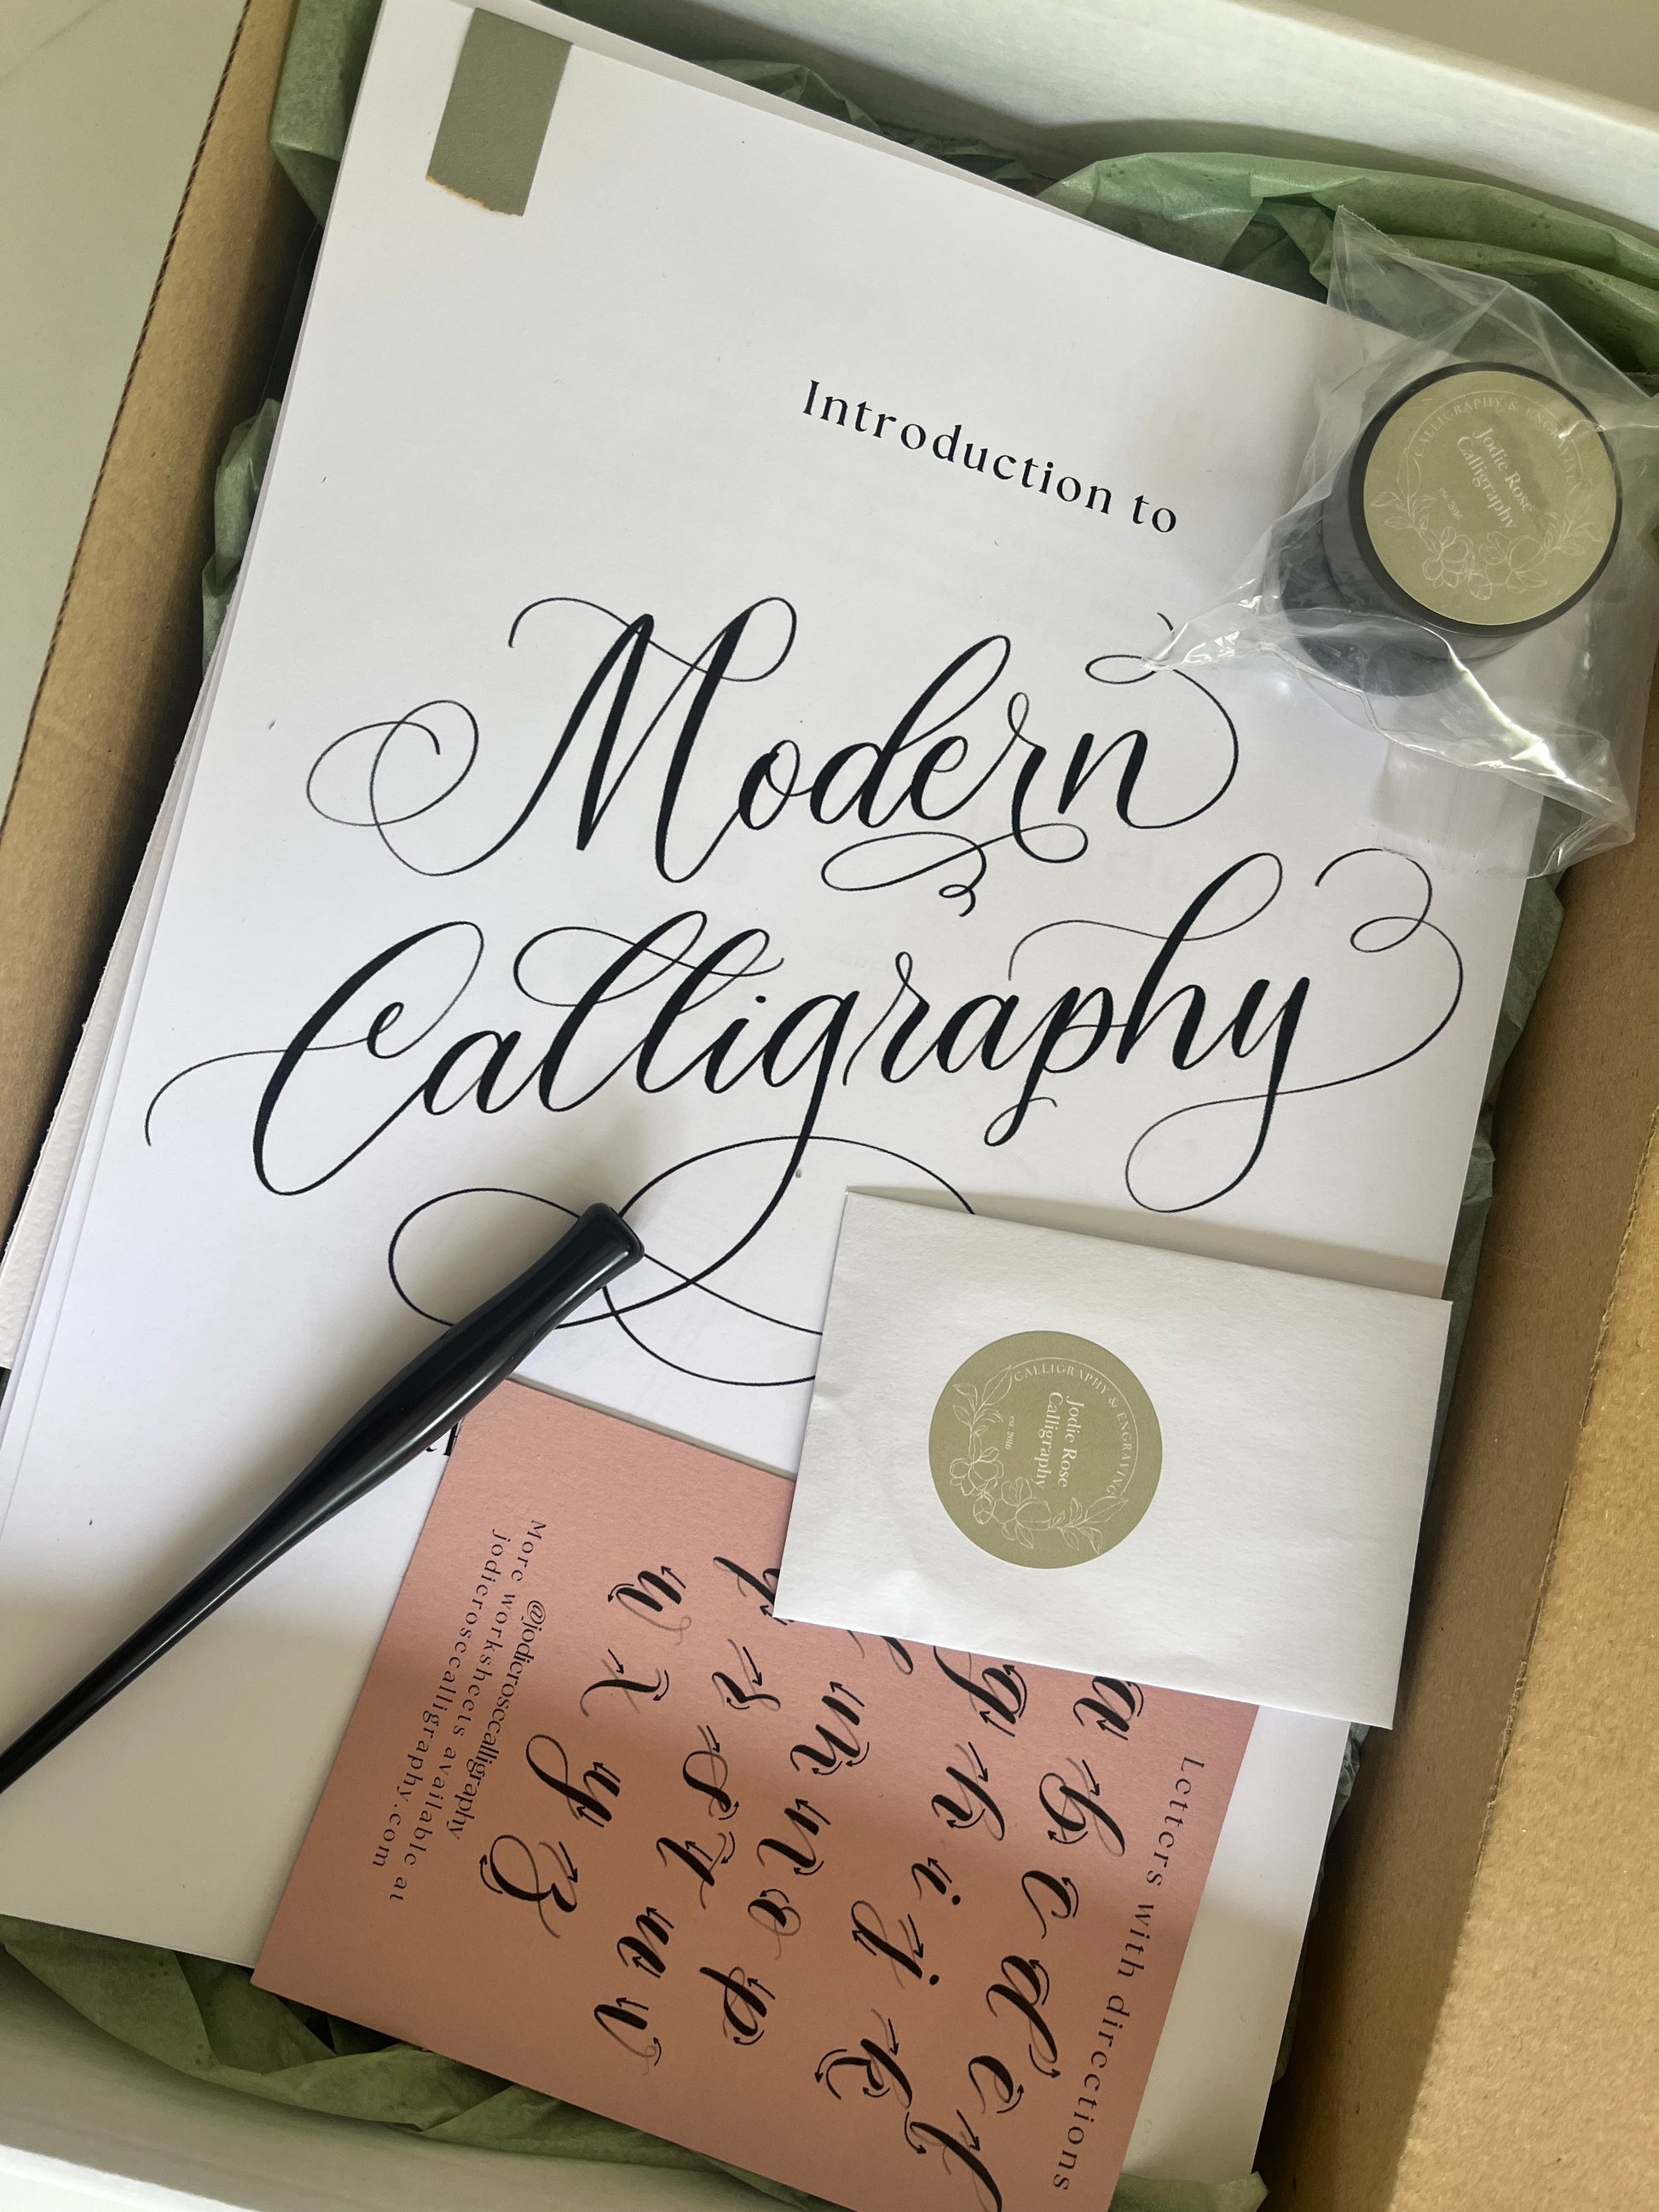 DIY calligraphy, learn modern calligraphy, calligraphy tools, affordable calligraphy kits, calligraphy hobby